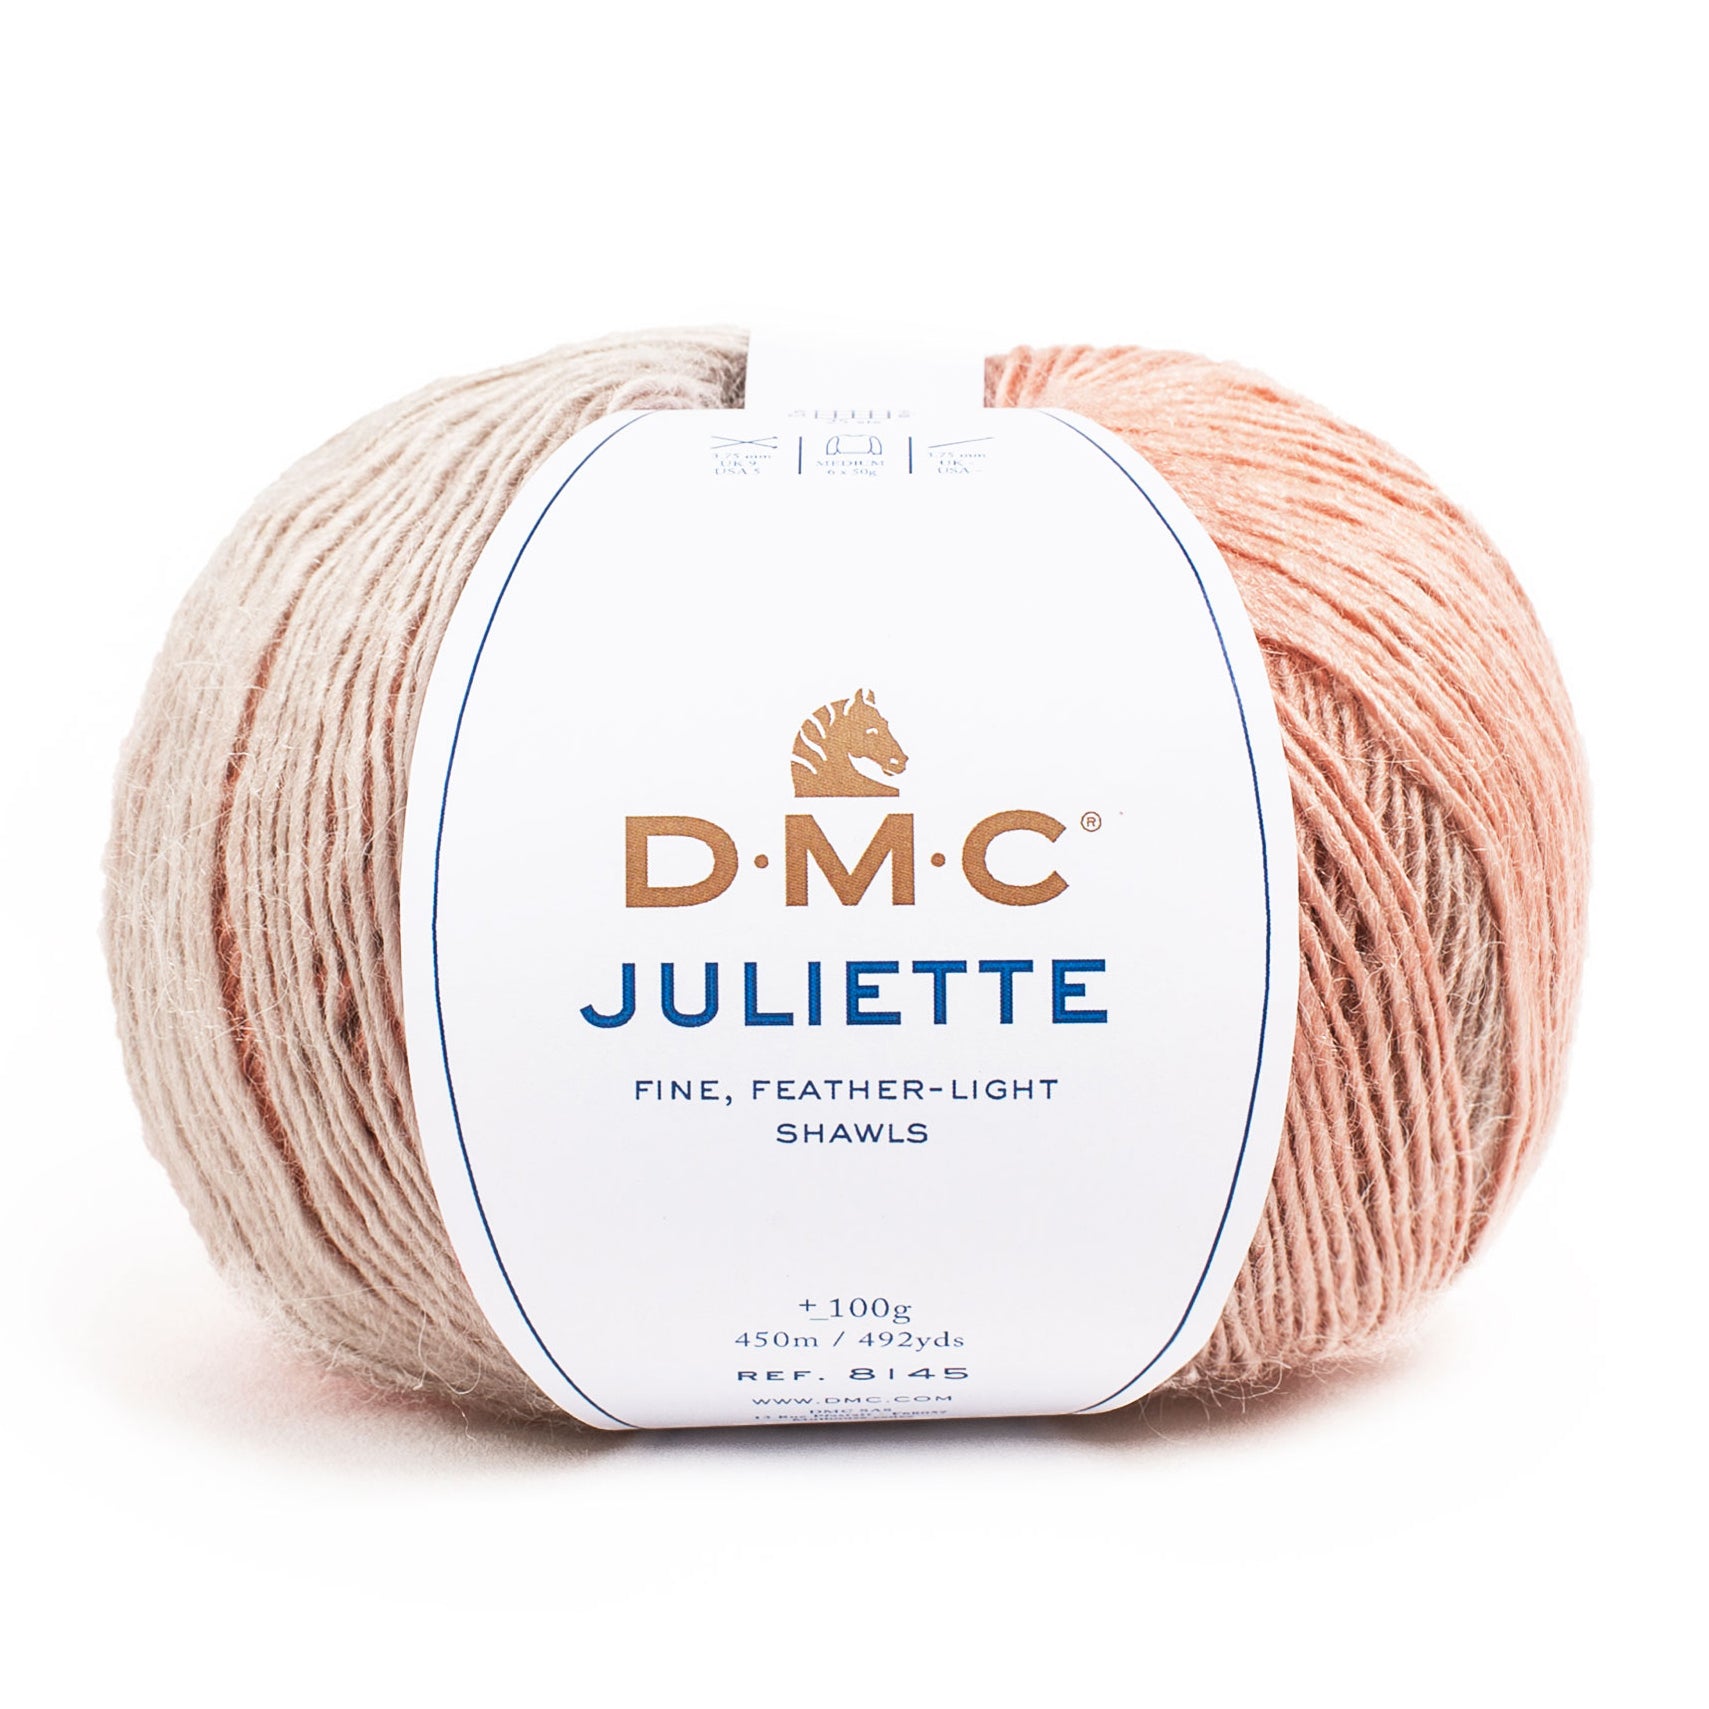 DMC Lana Juliette: Multicolor yarn perfect for soft shawls